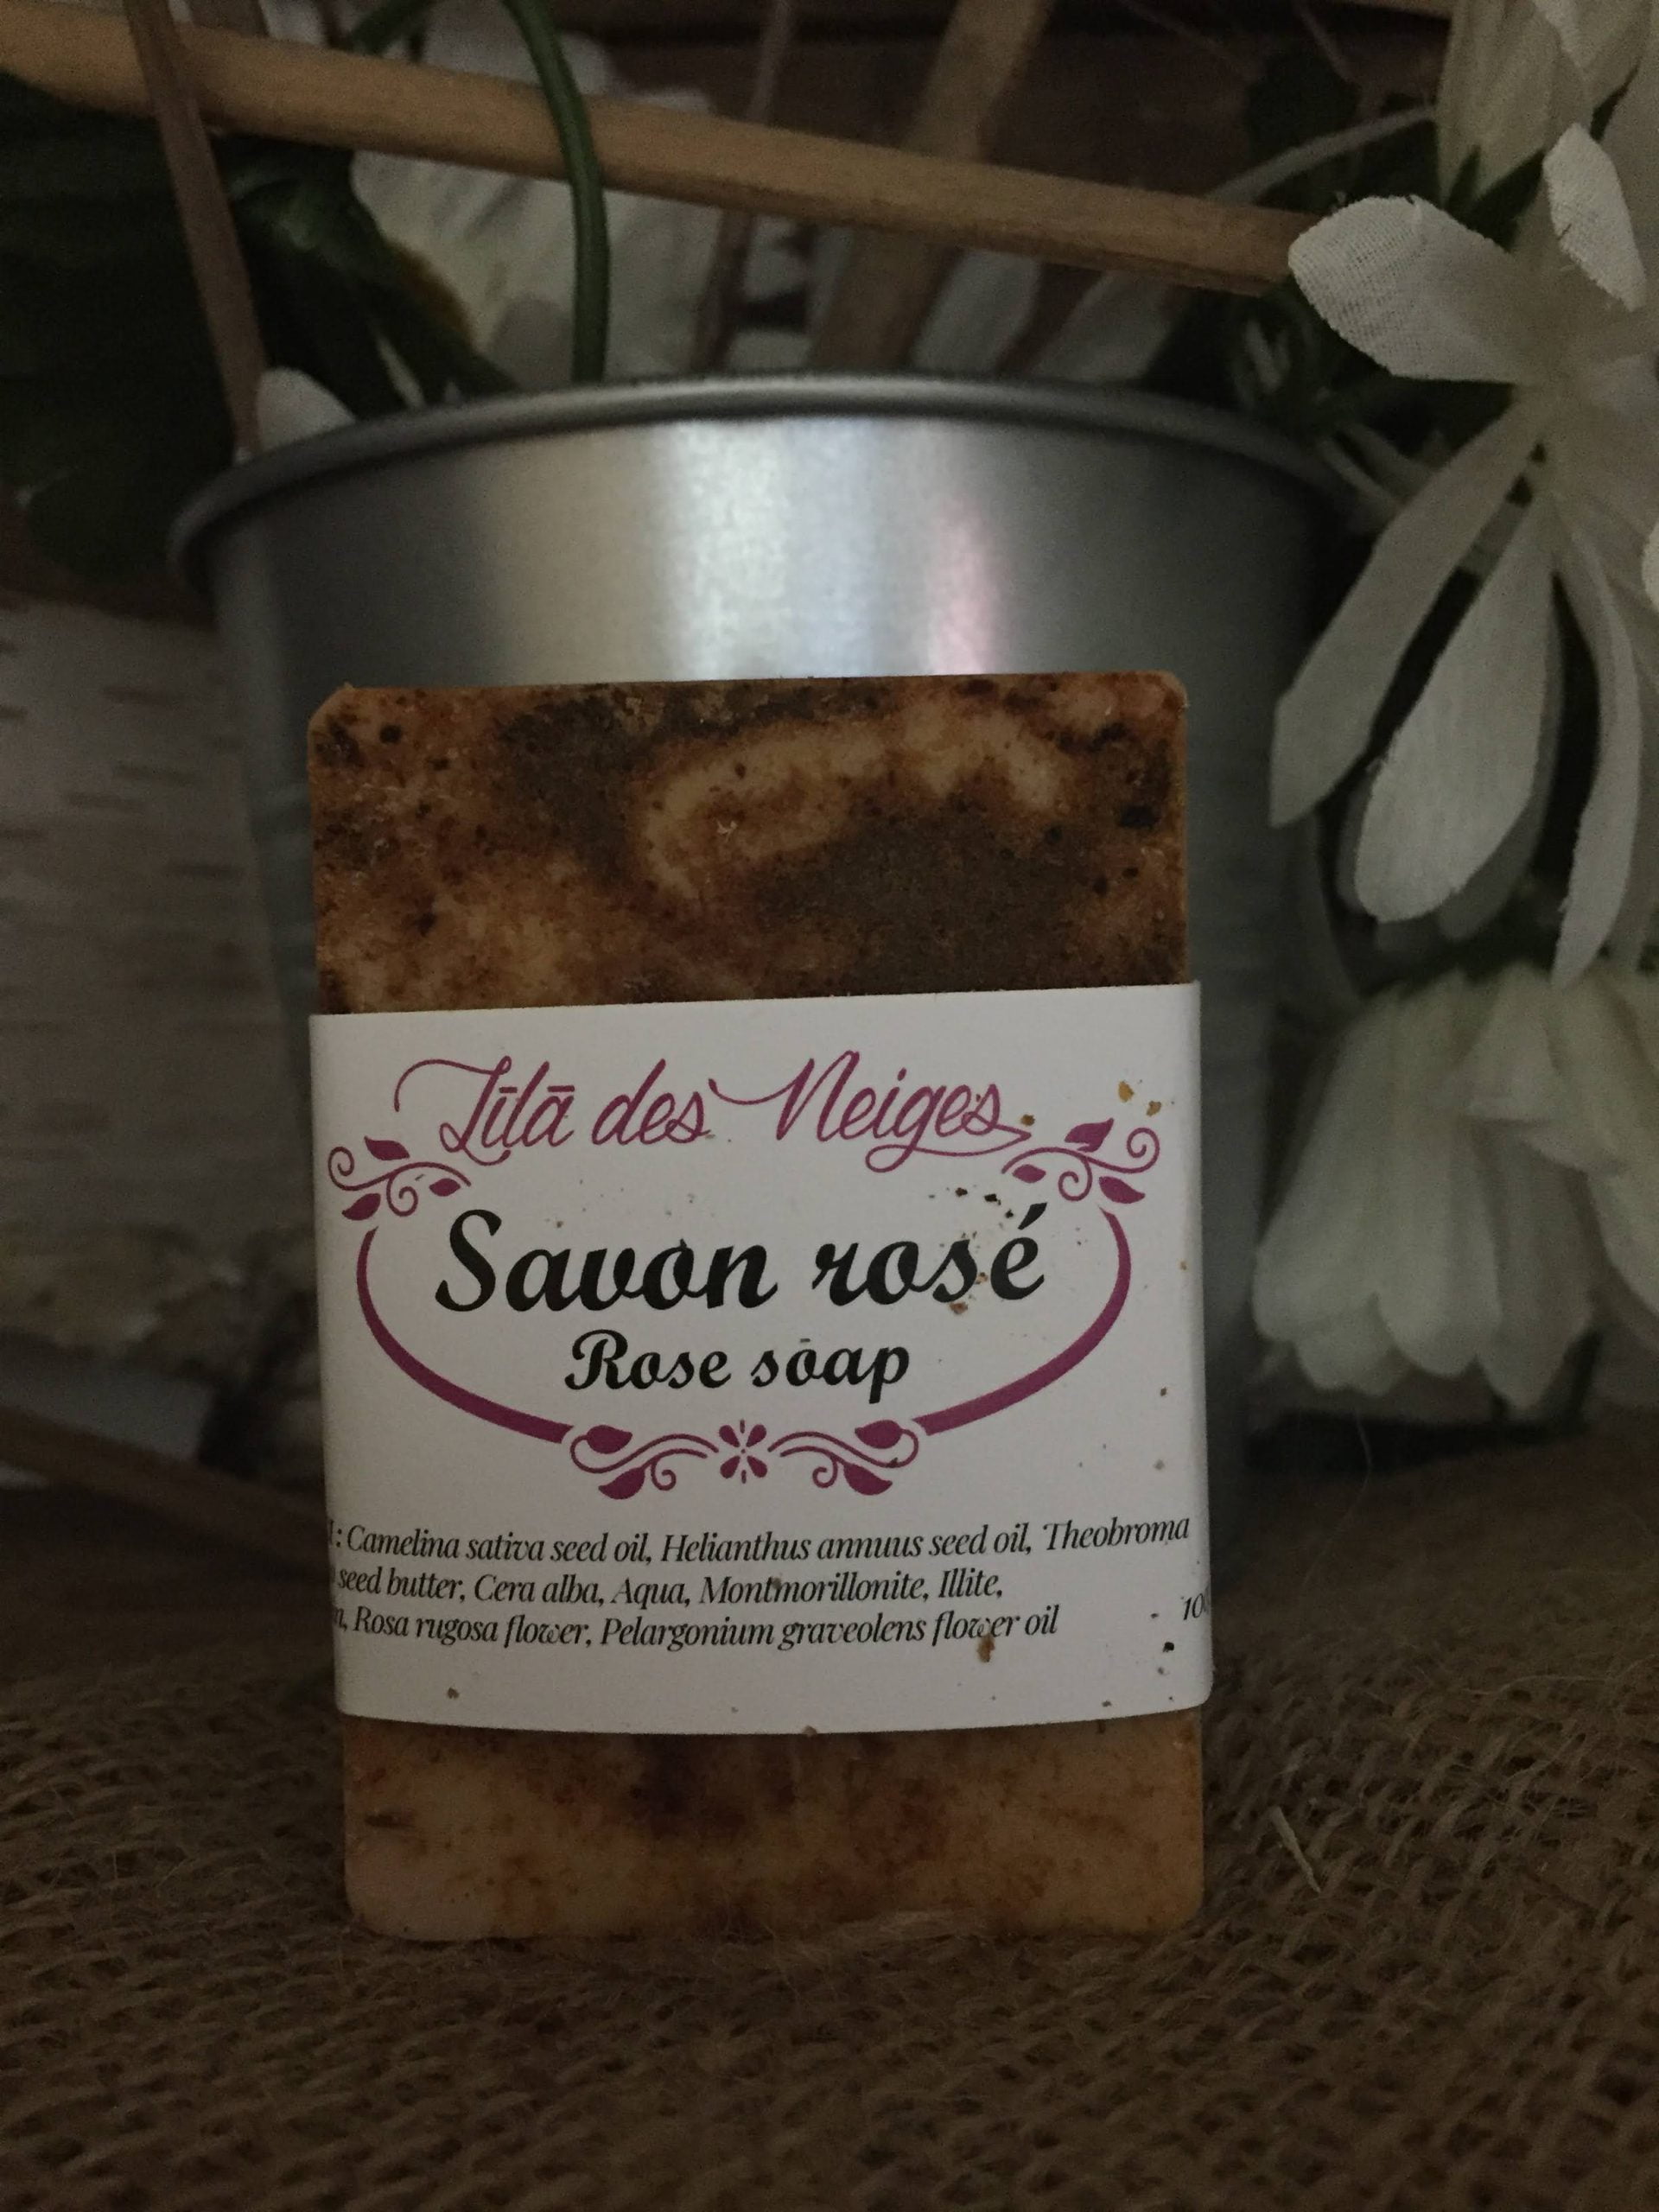 Savon rosé - Rose soap